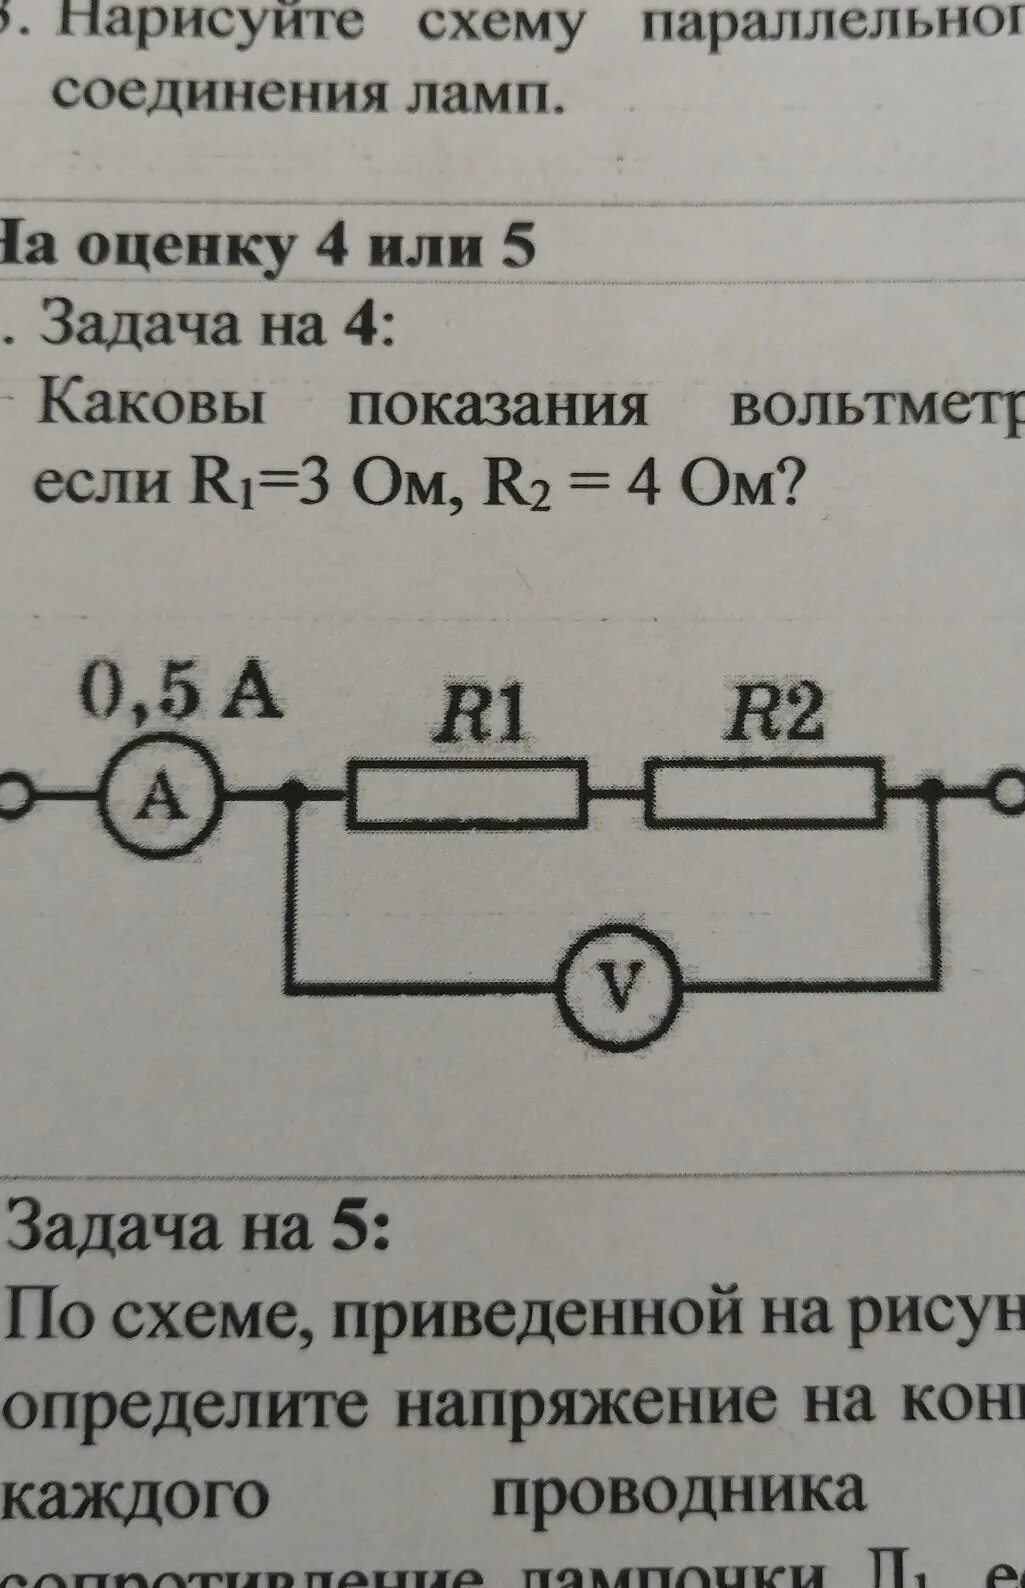 Показания вольтметра r2. Каковы показания вольтметра если r1 3 ом r2 4 ом. Если показания вольтметра. Каковы показания вольтметра если r1 3 ом r2 4 ом а амперметра 0.5 а.